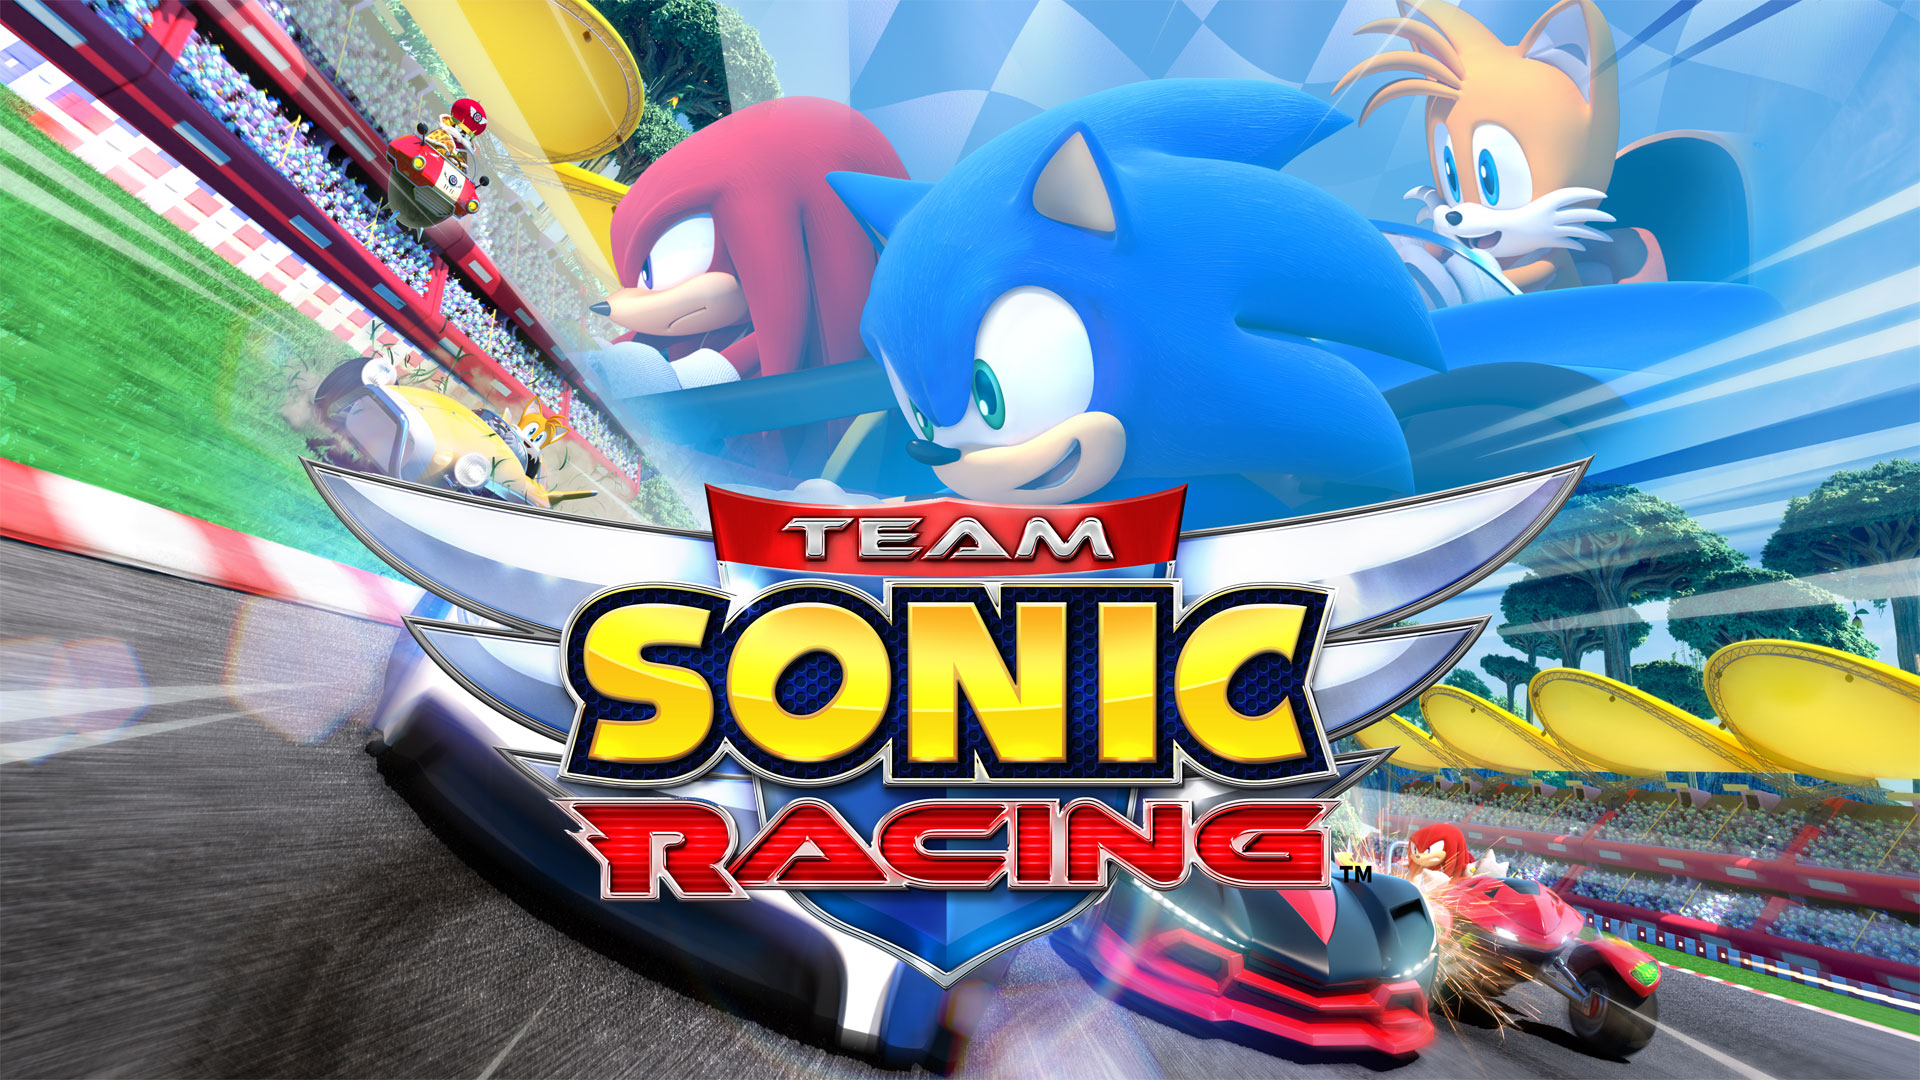 Sonic team racing steam фото 55